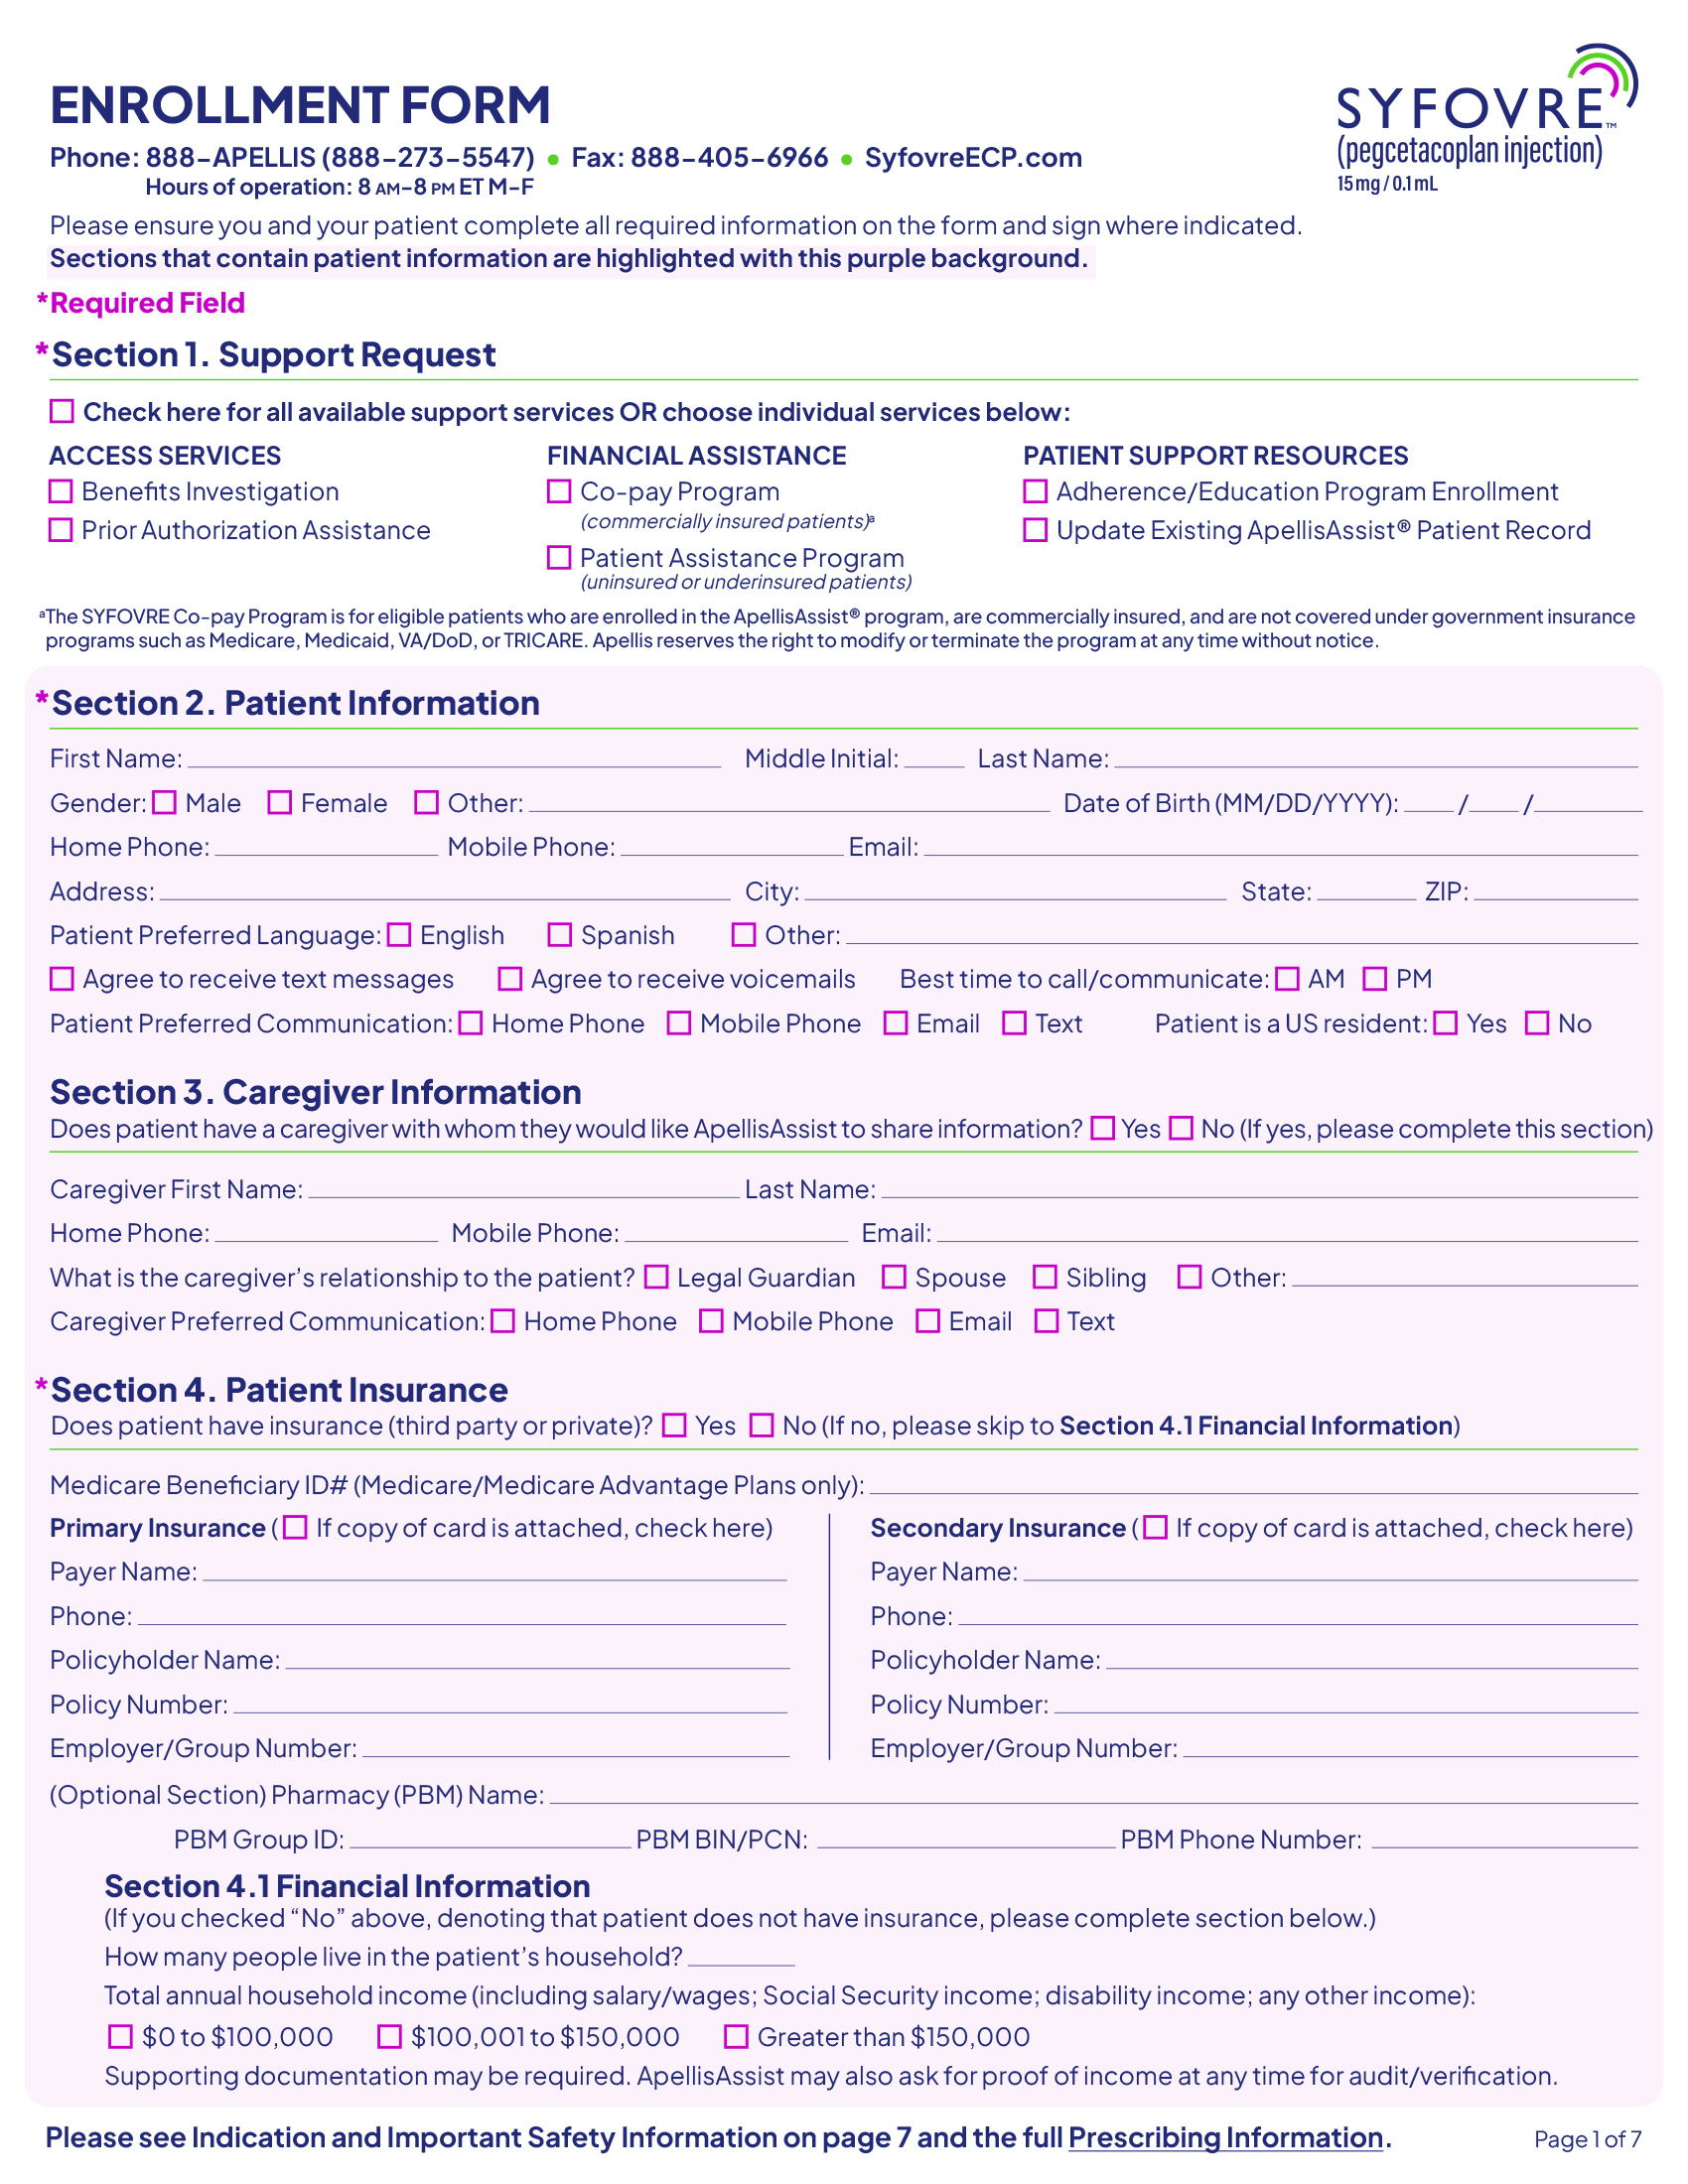 SYFOVRE® (pegcetacoplan injection) Enrollment Form Guide thumbnail